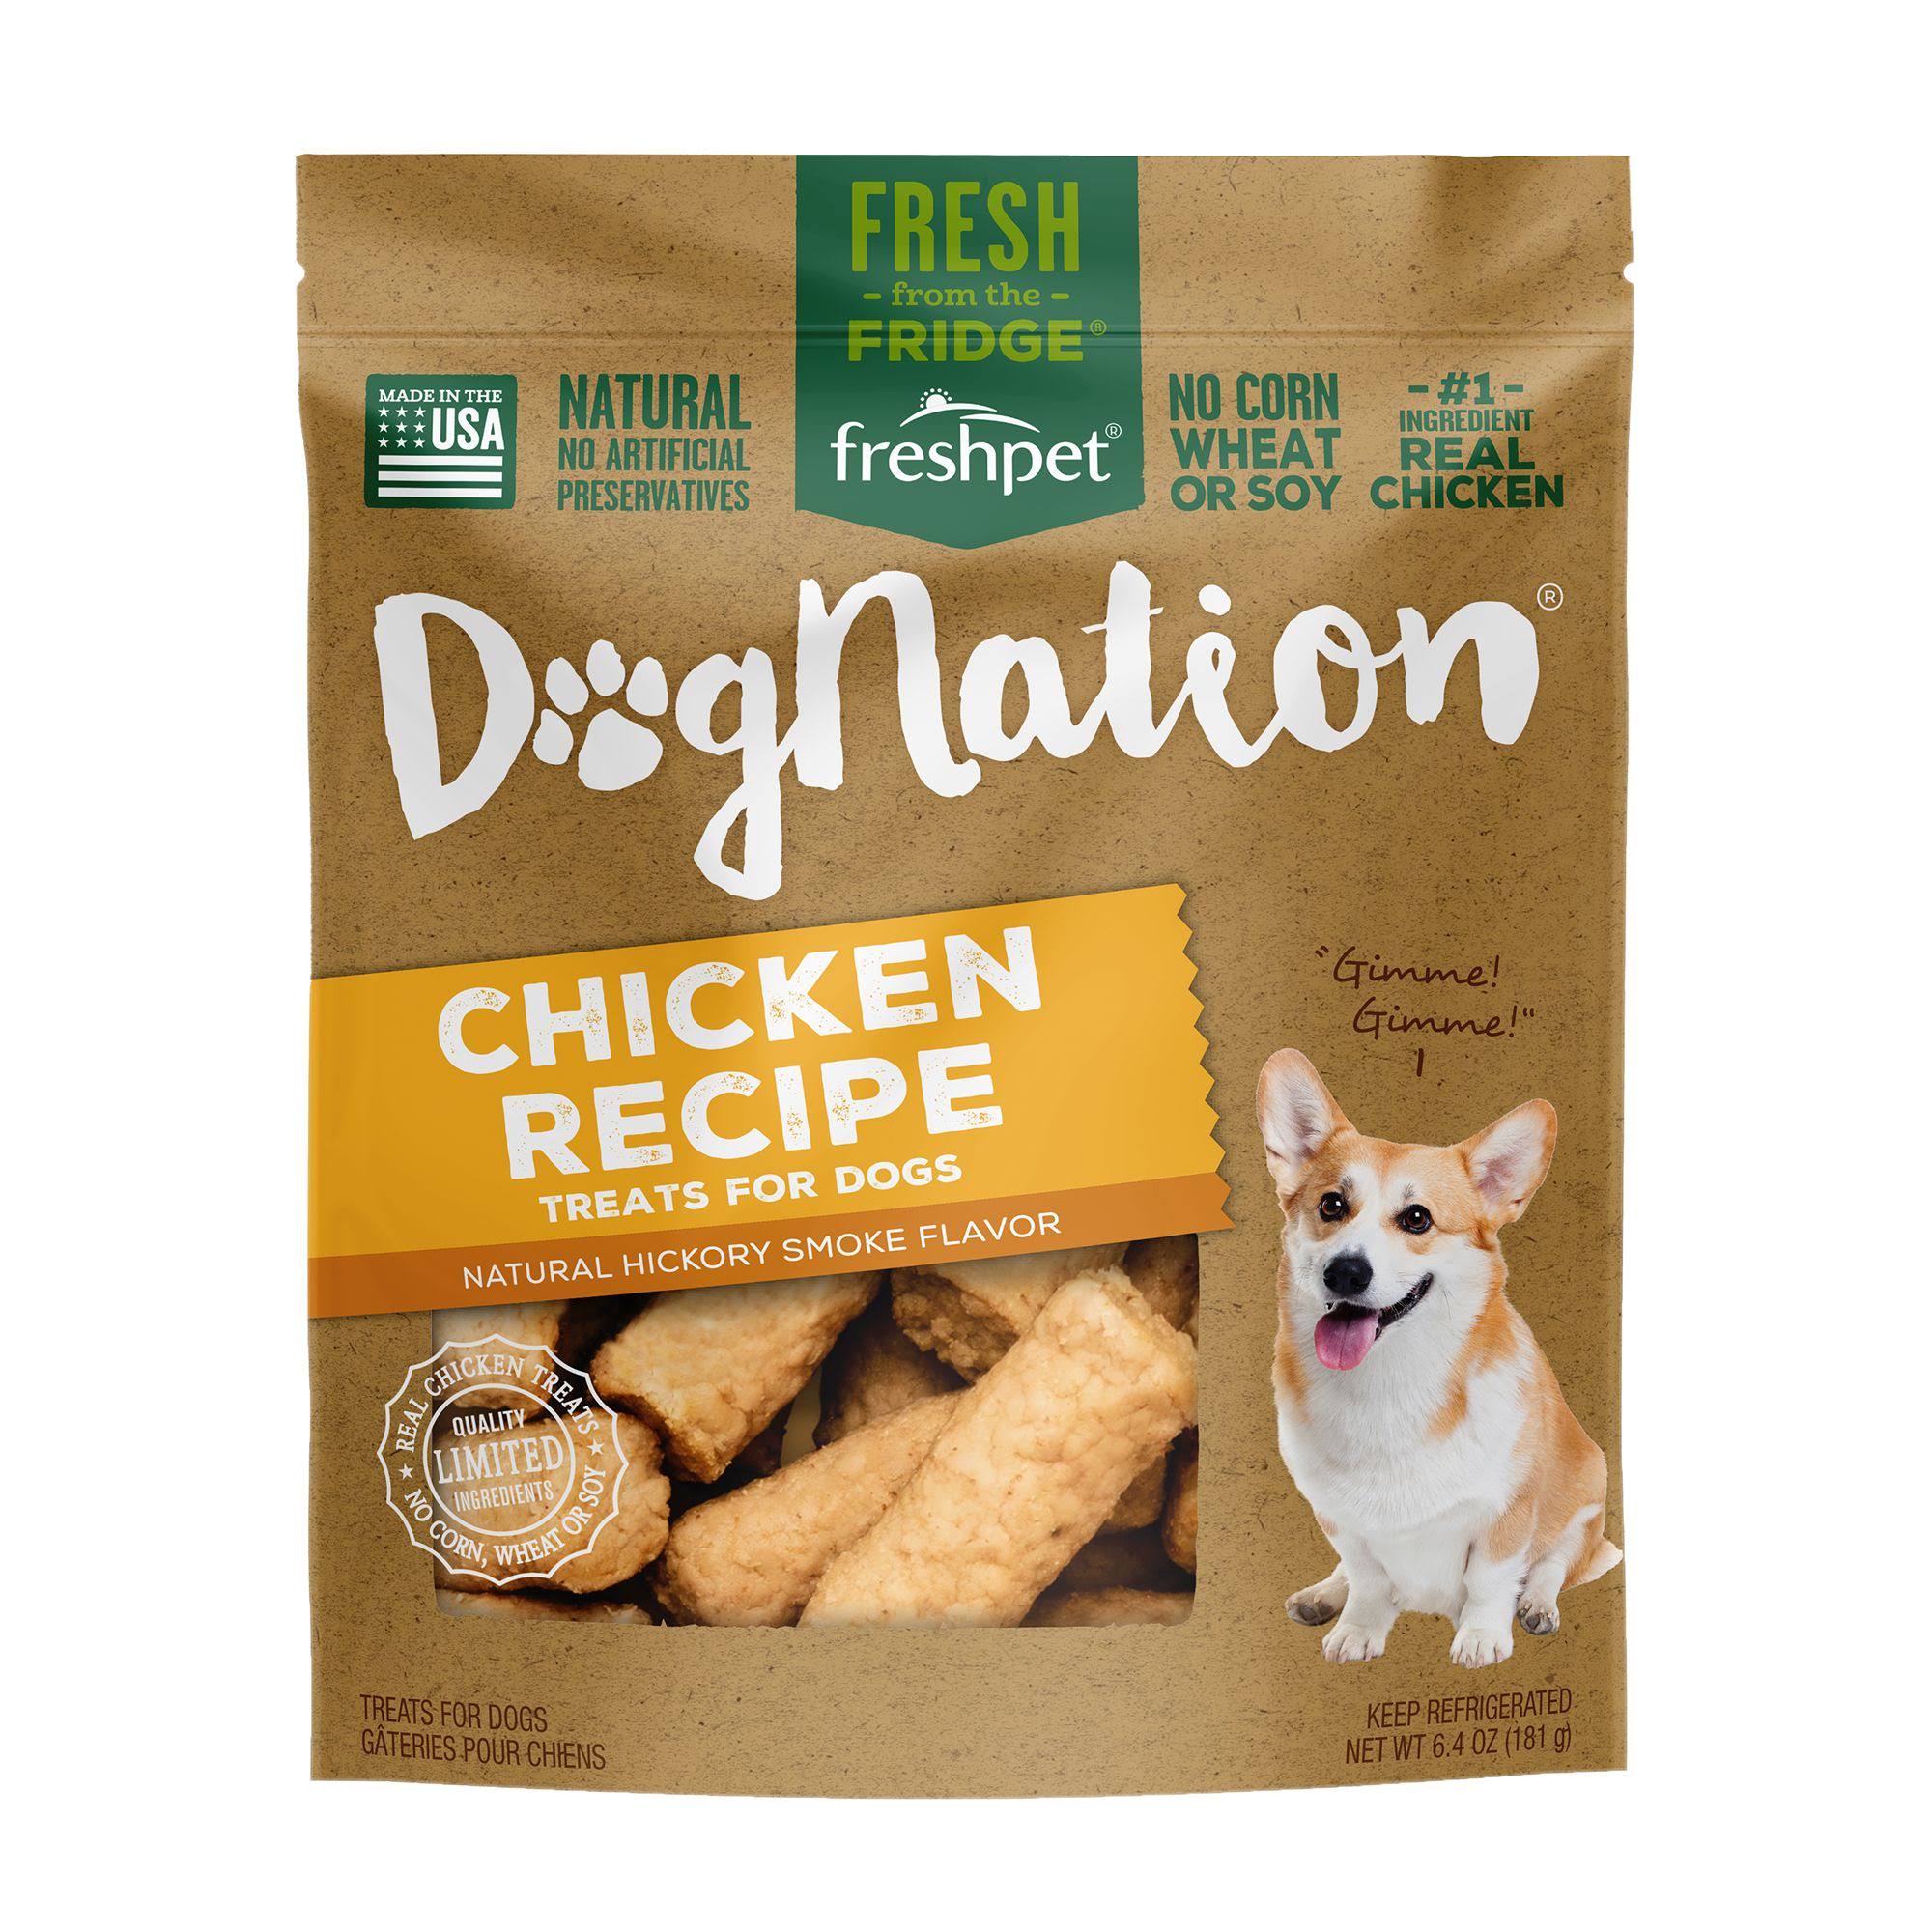 Freshpet Chicken Recipe Treats for Dogs - 6.4 oz